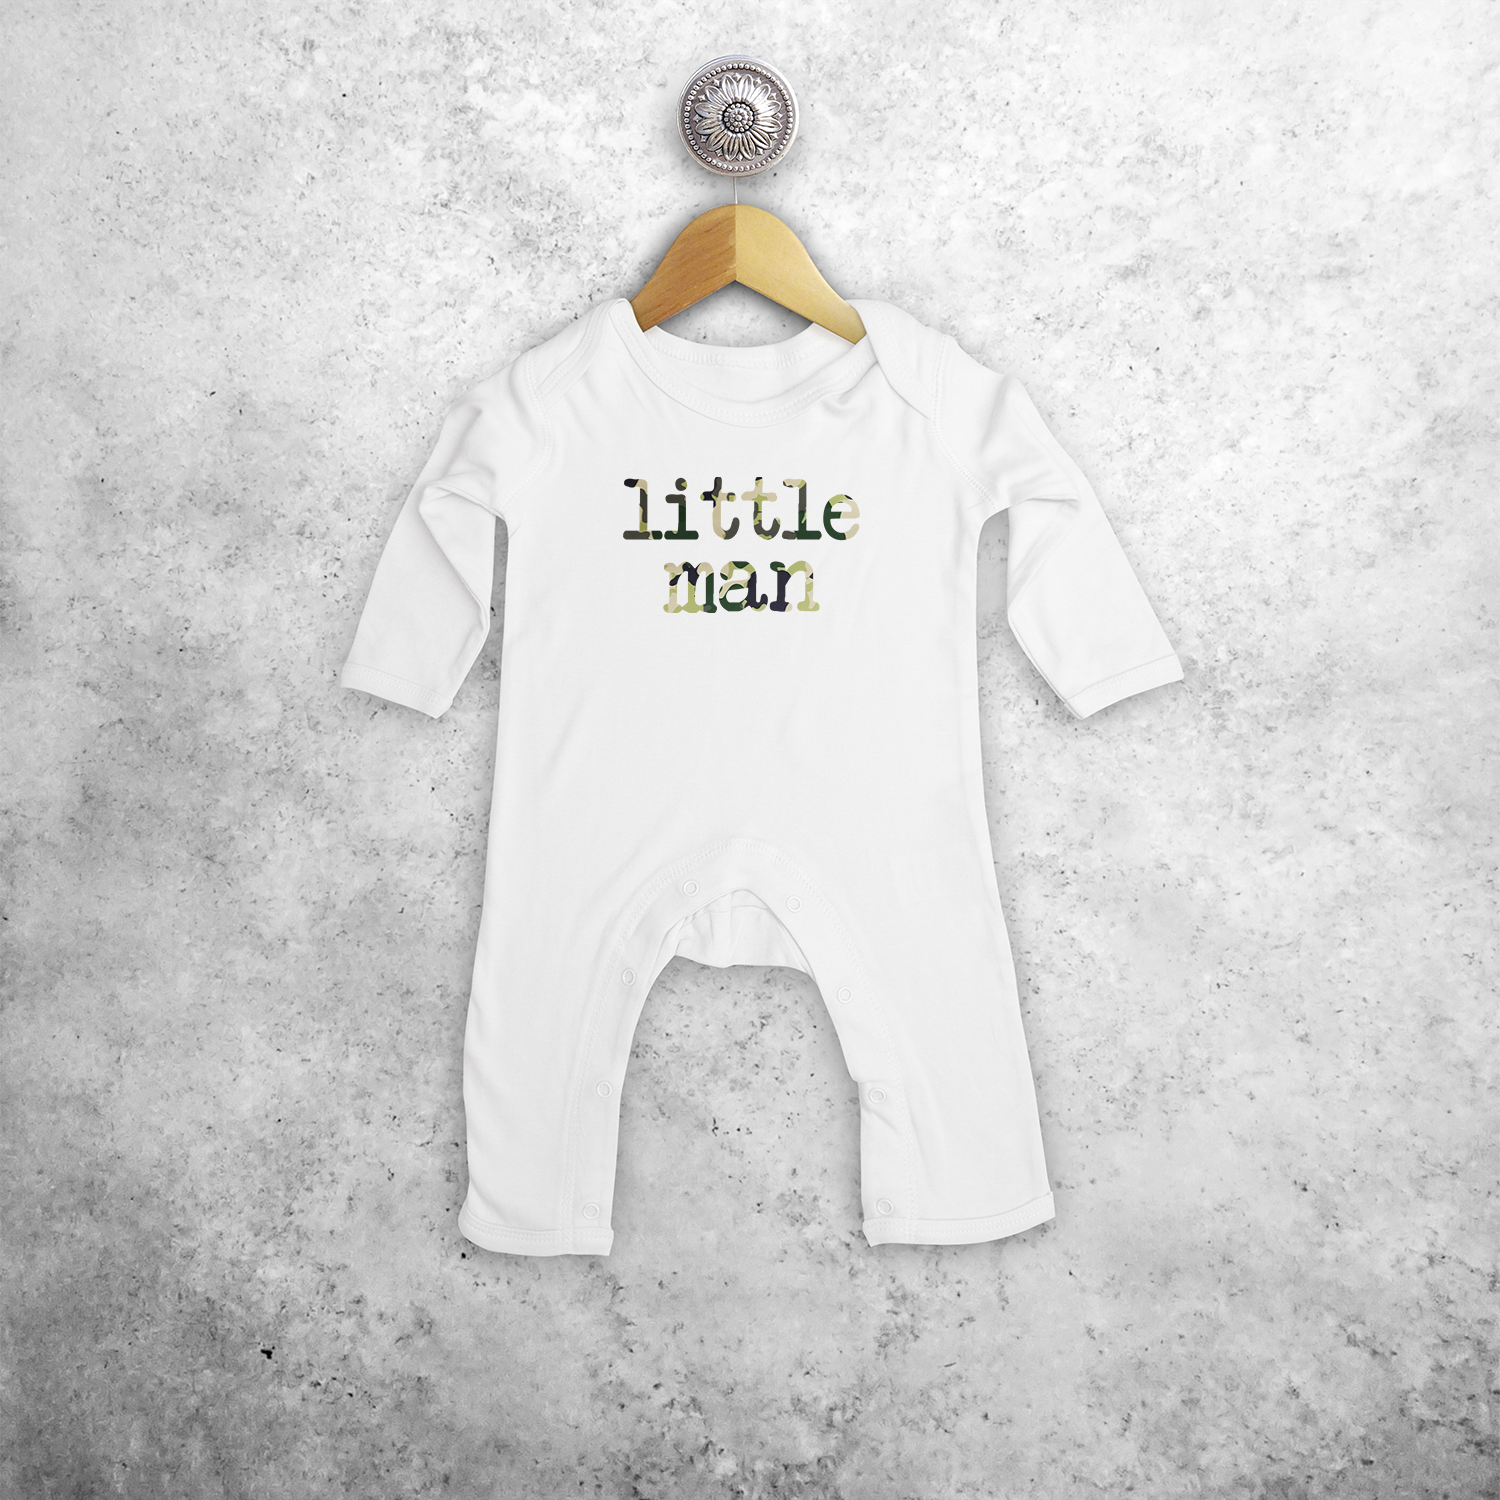 'Little man' baby romper